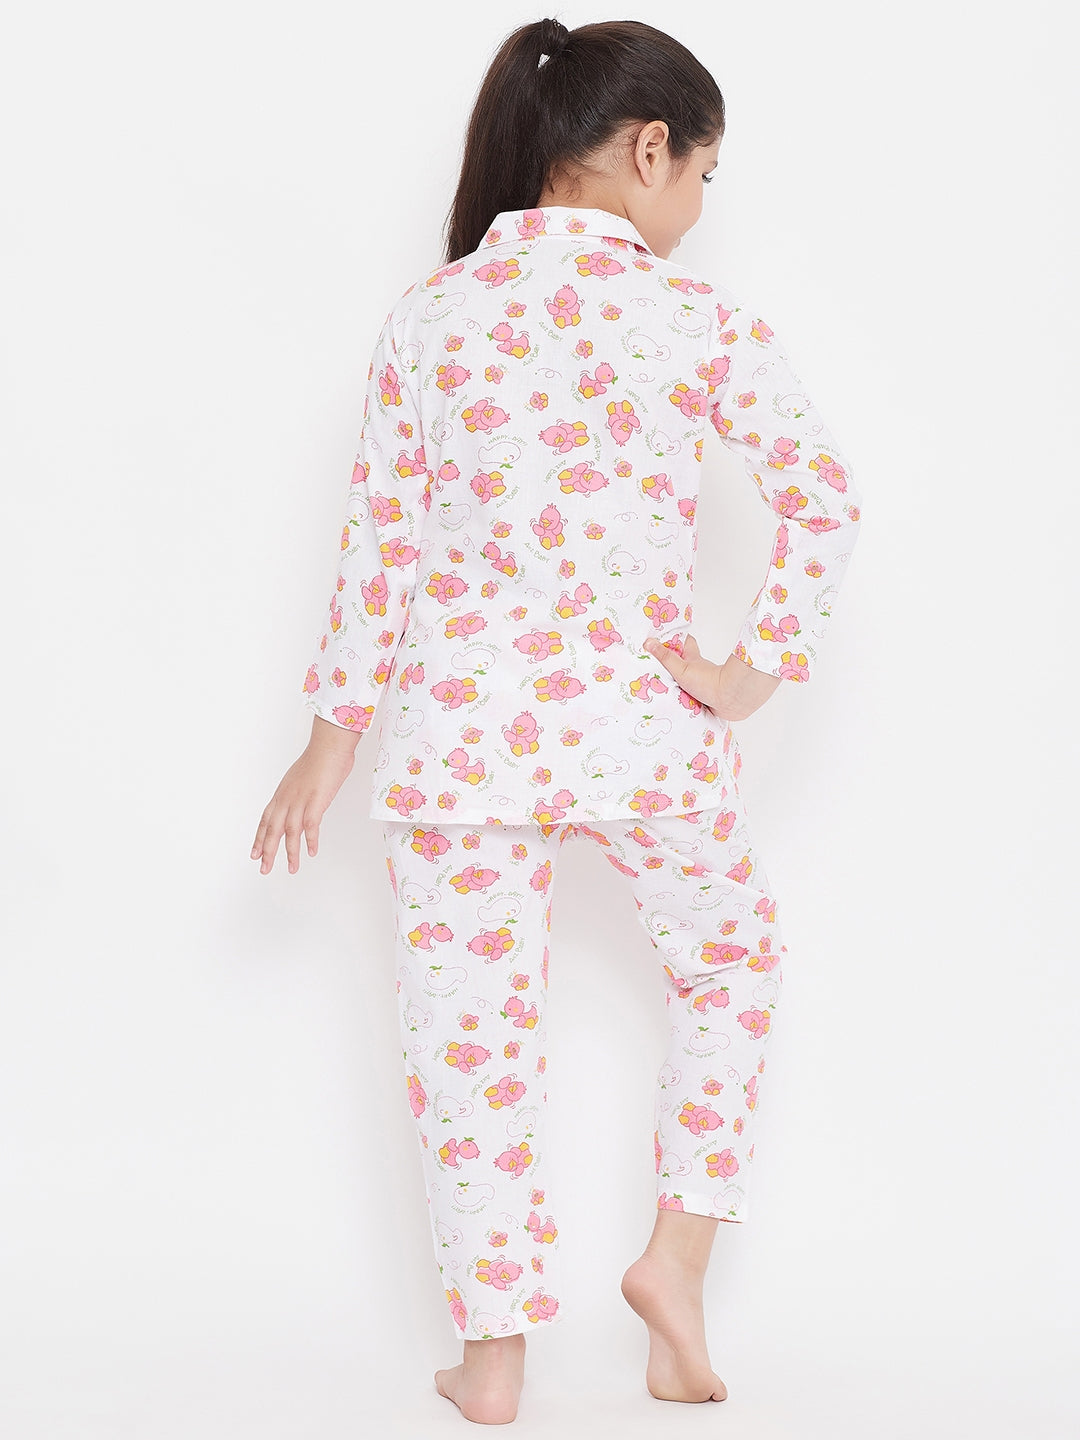 Kydzi Pink & White Printed Rayon Nightsuit (Pack of 2)